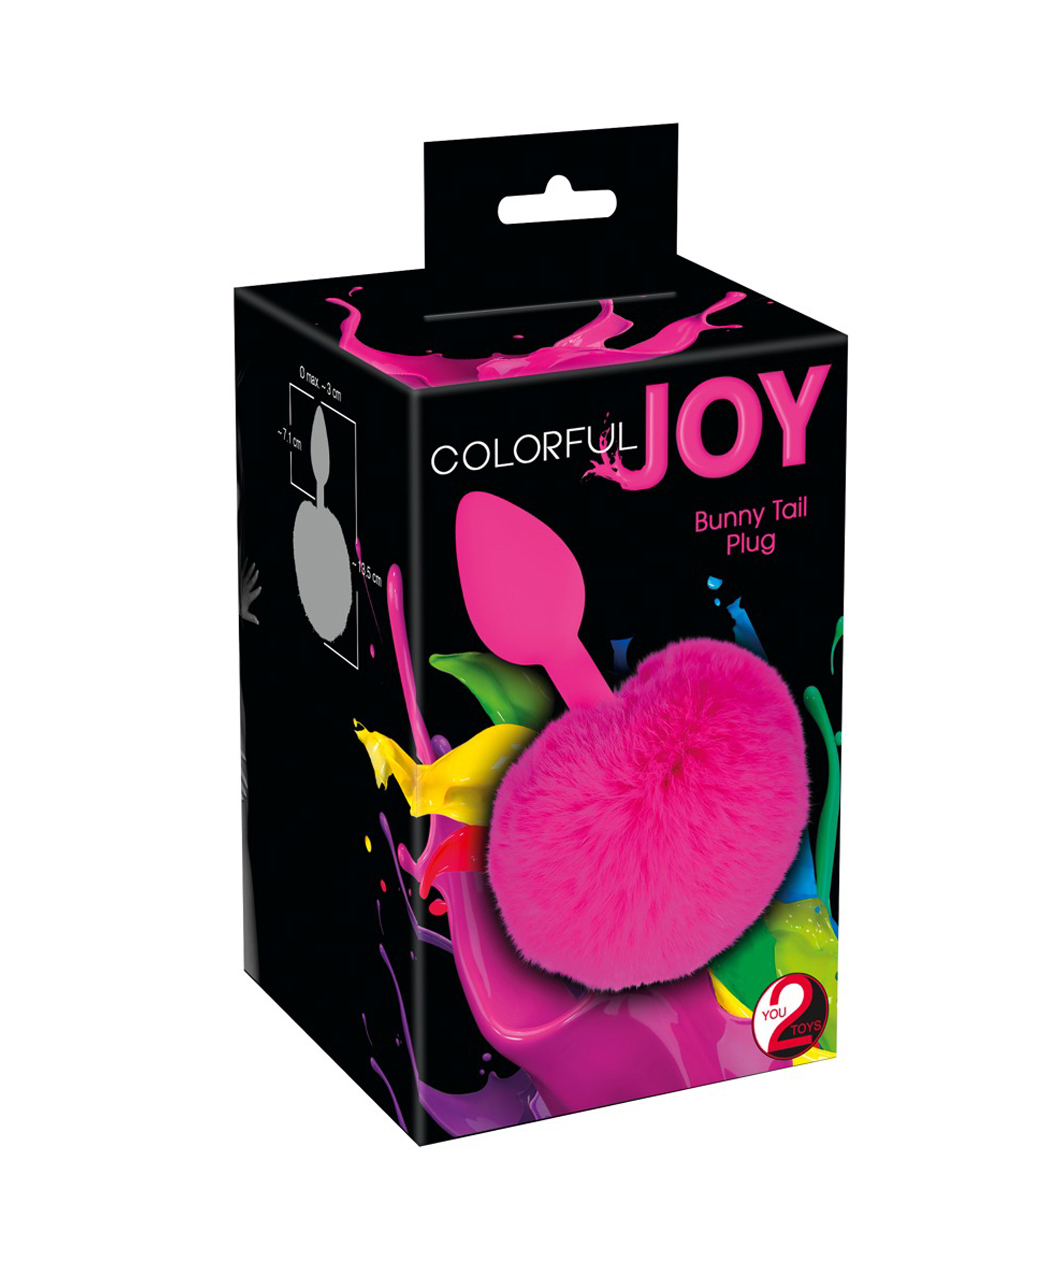 Colorful Joy Bunny Tail Plug